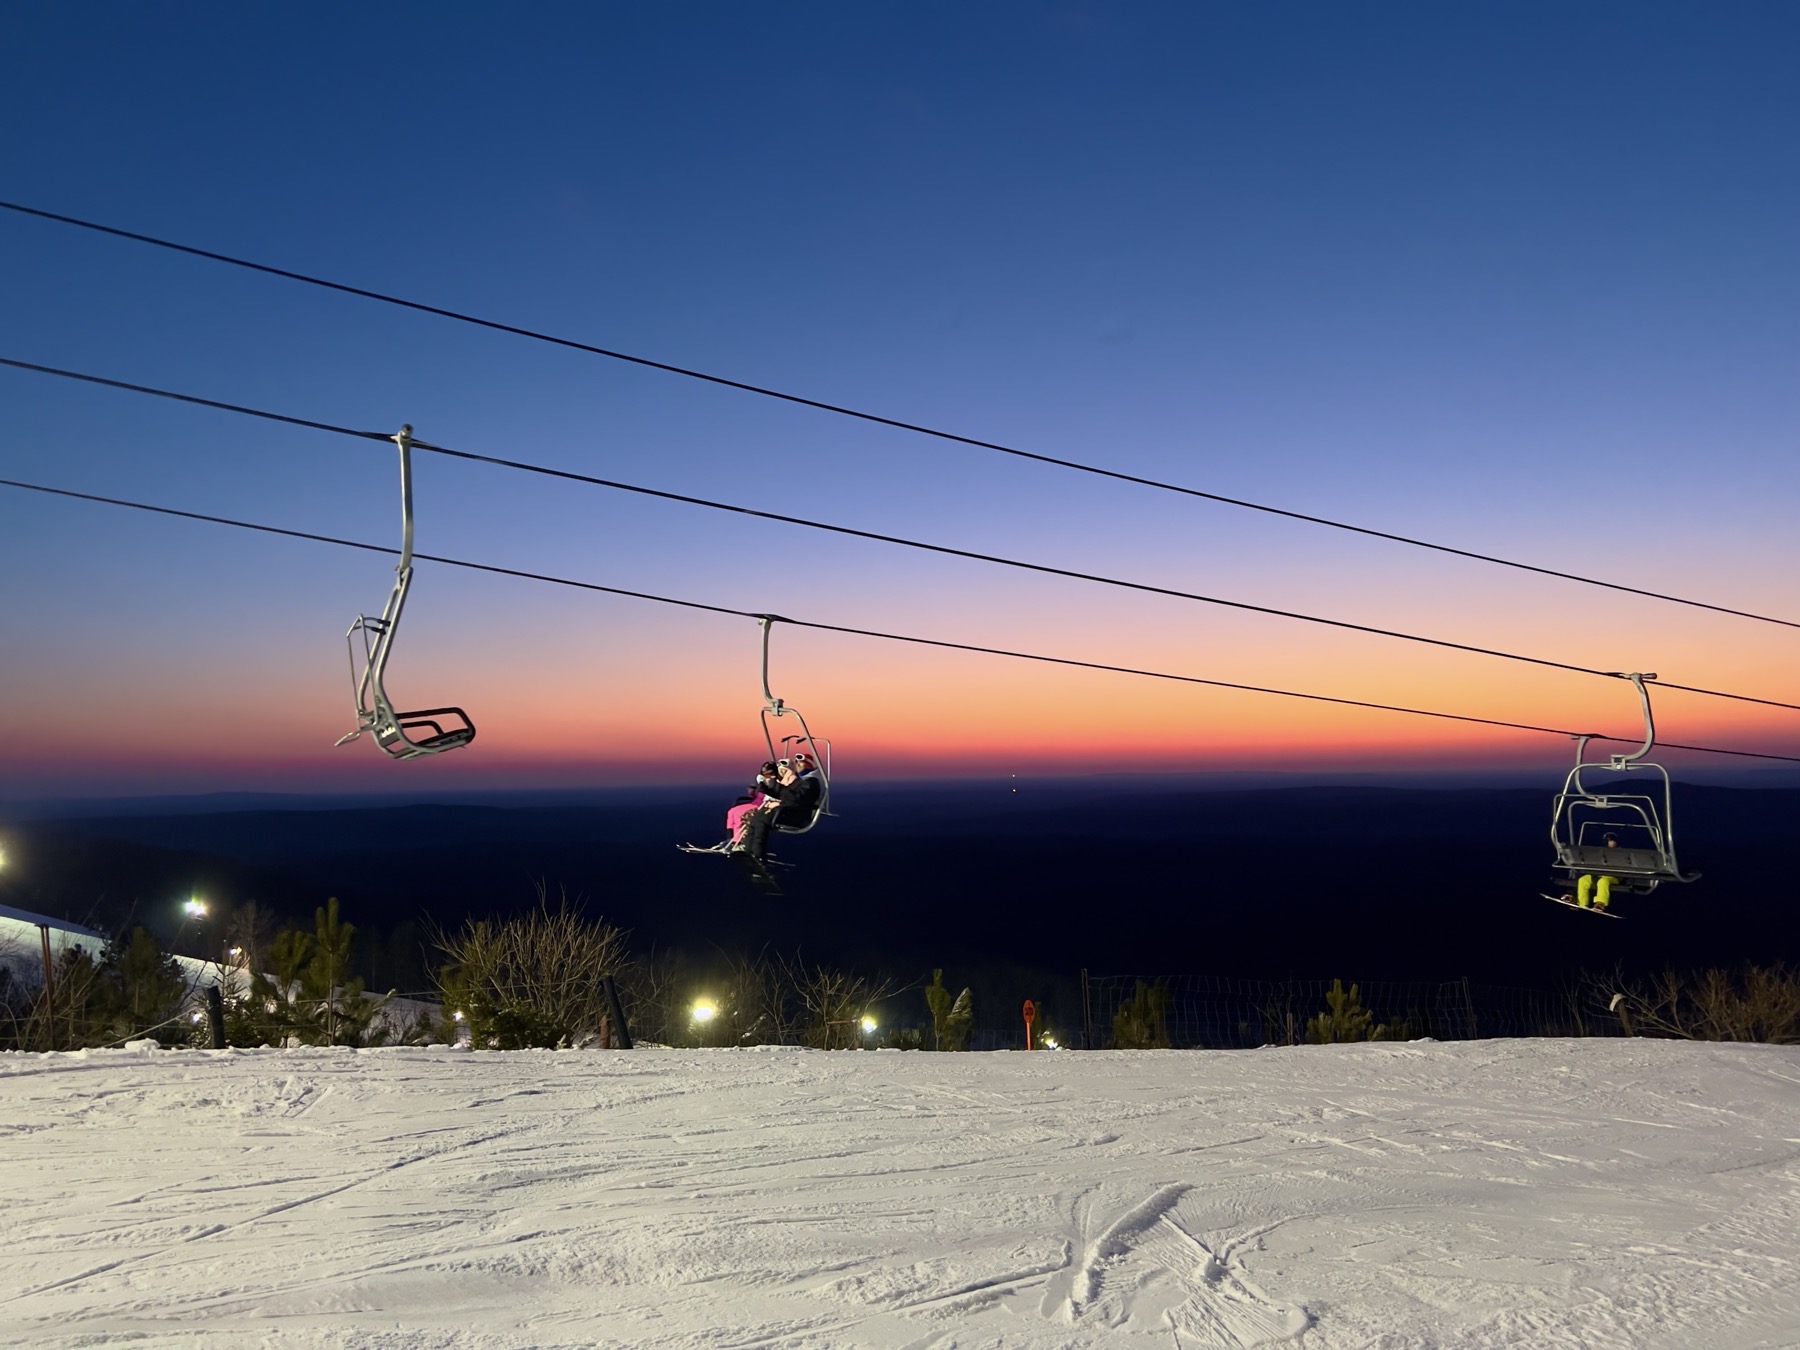 Sunset with Ski Lift